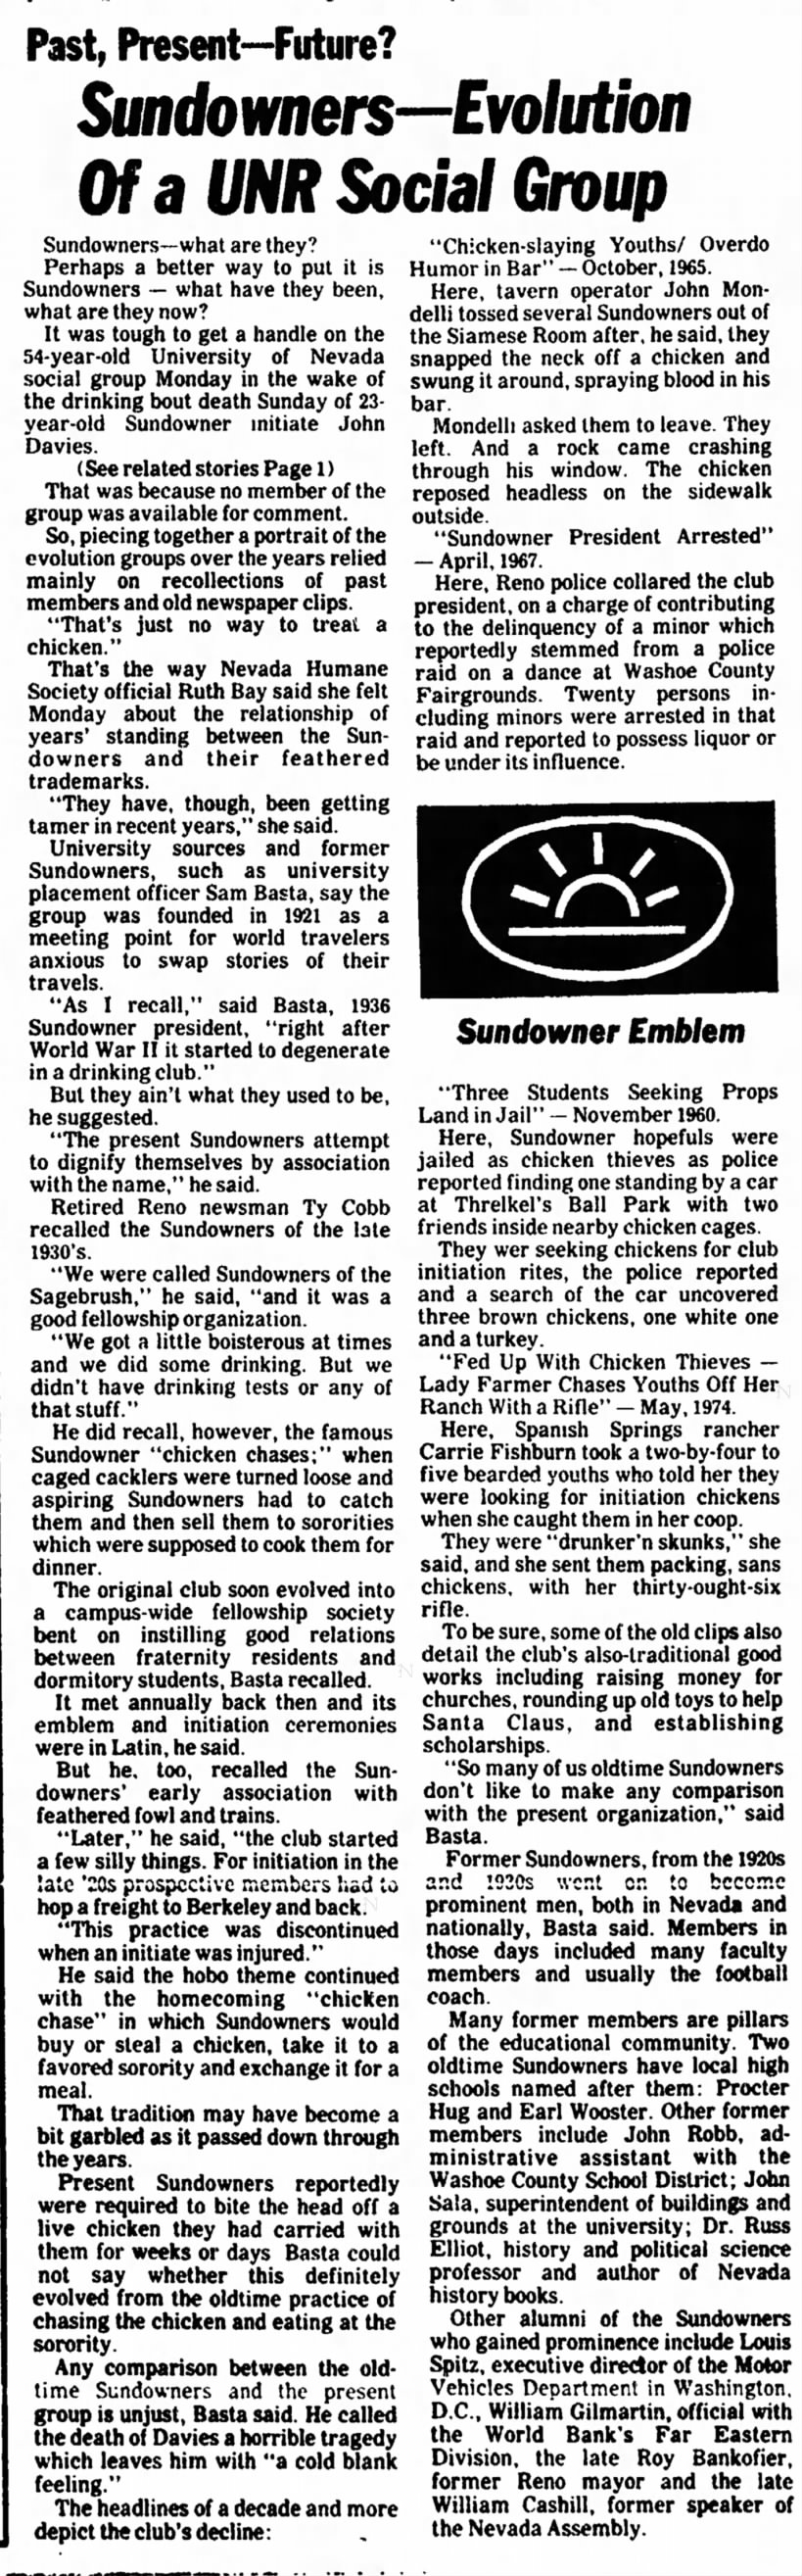 sundowner history 14 oct 1975